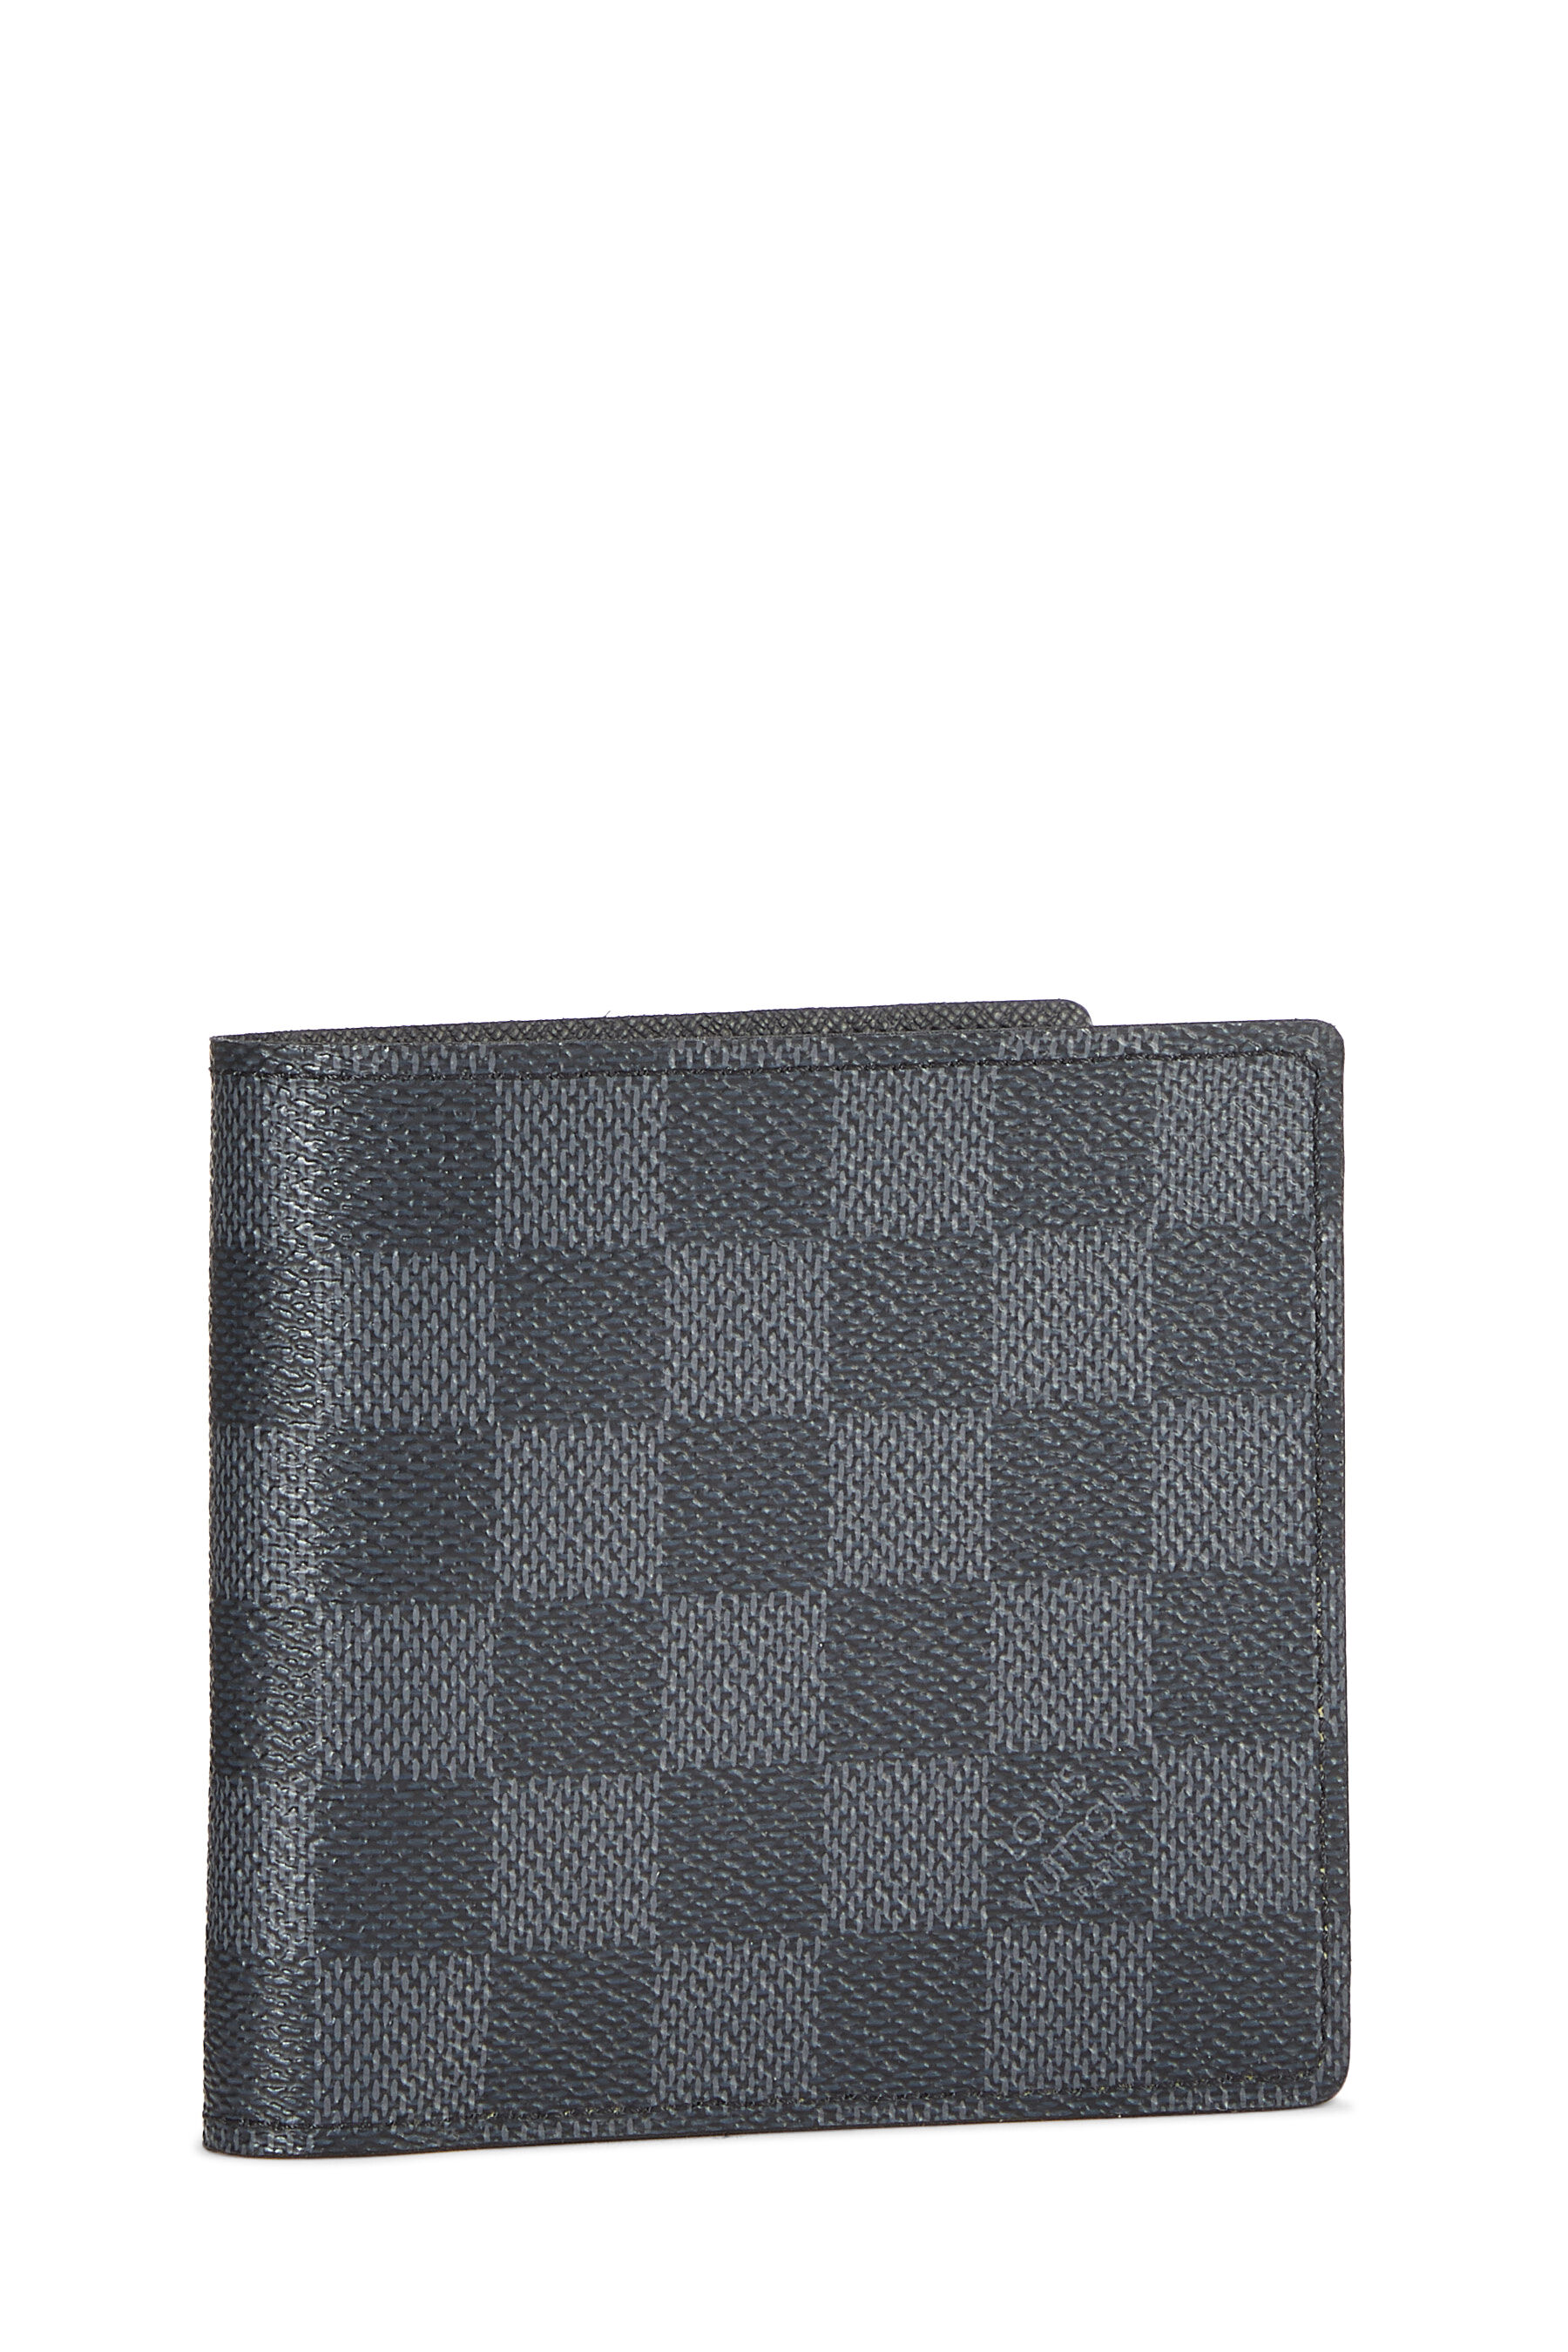 Pre-owned Louis Vuitton Marco Wallet Damier Graphite Black/grey